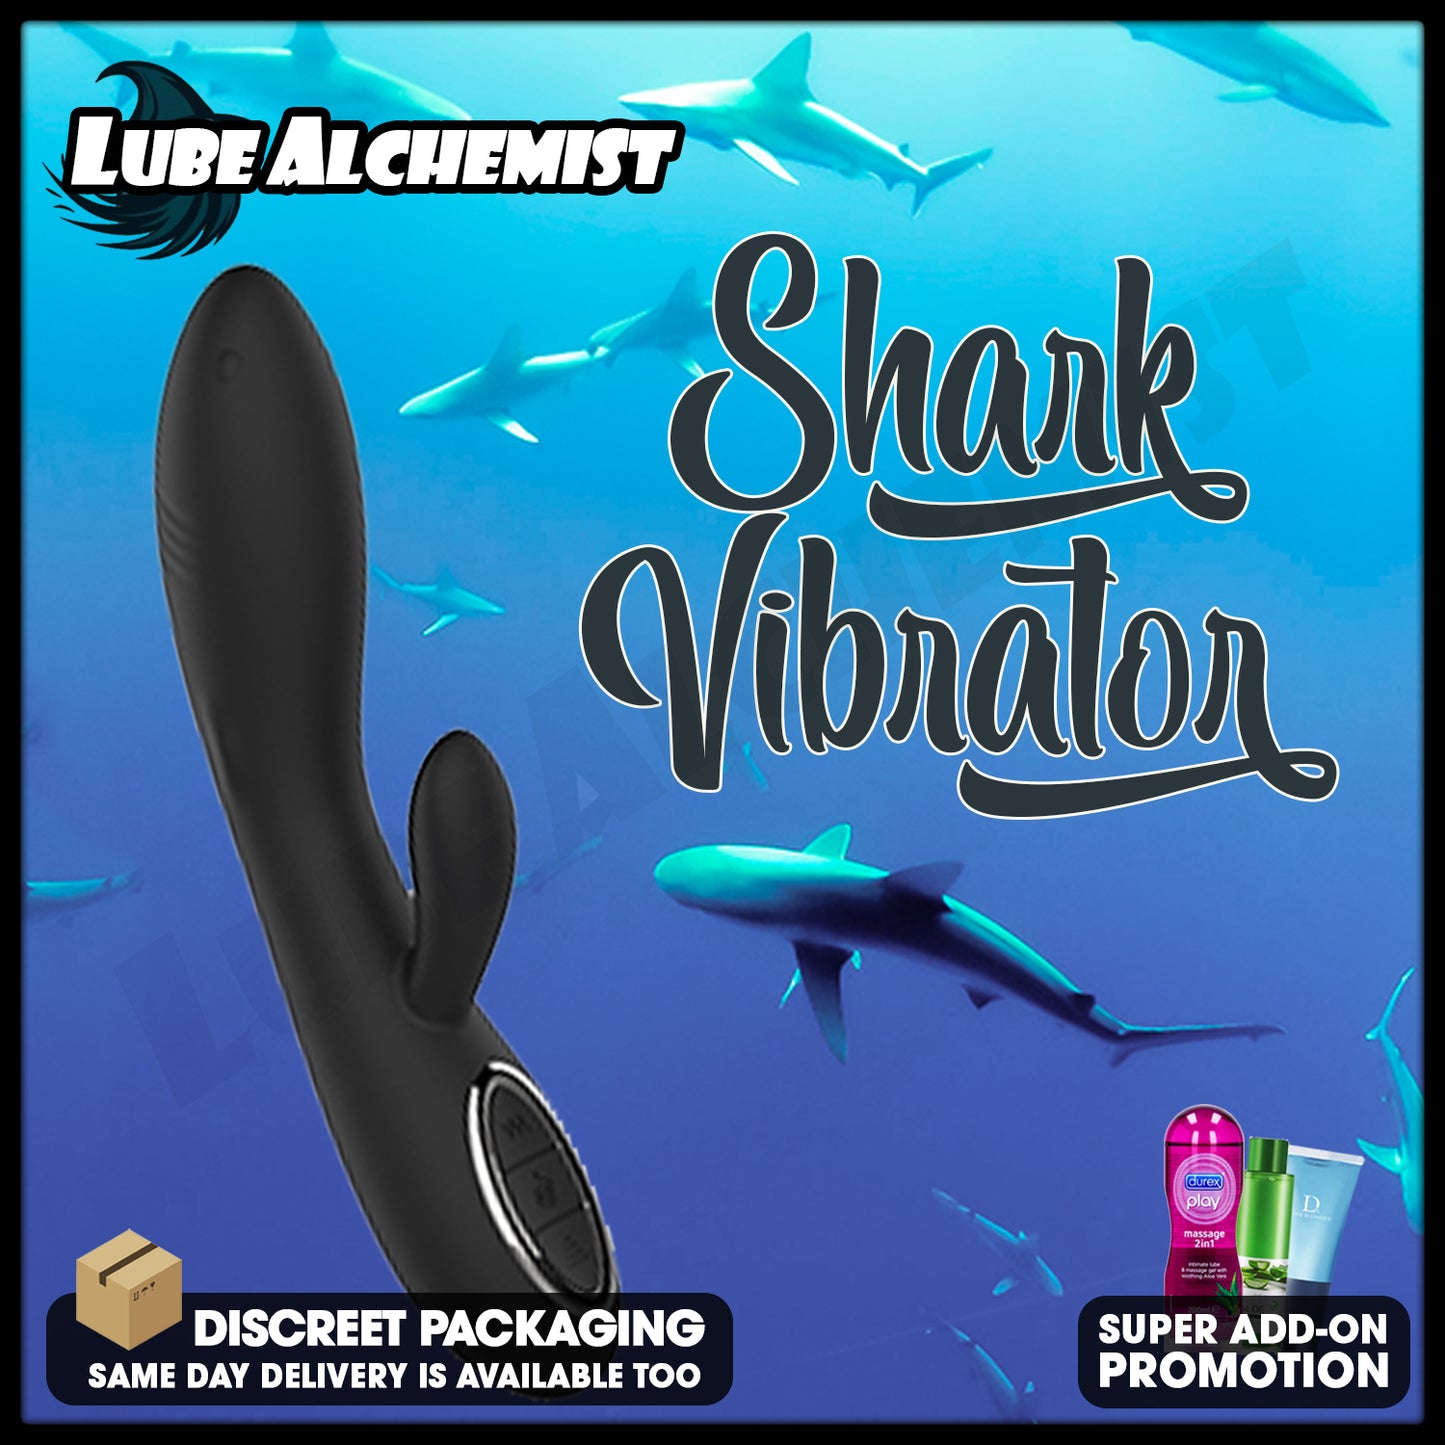 LubeAlchemist™ Shark Stick Vibrator